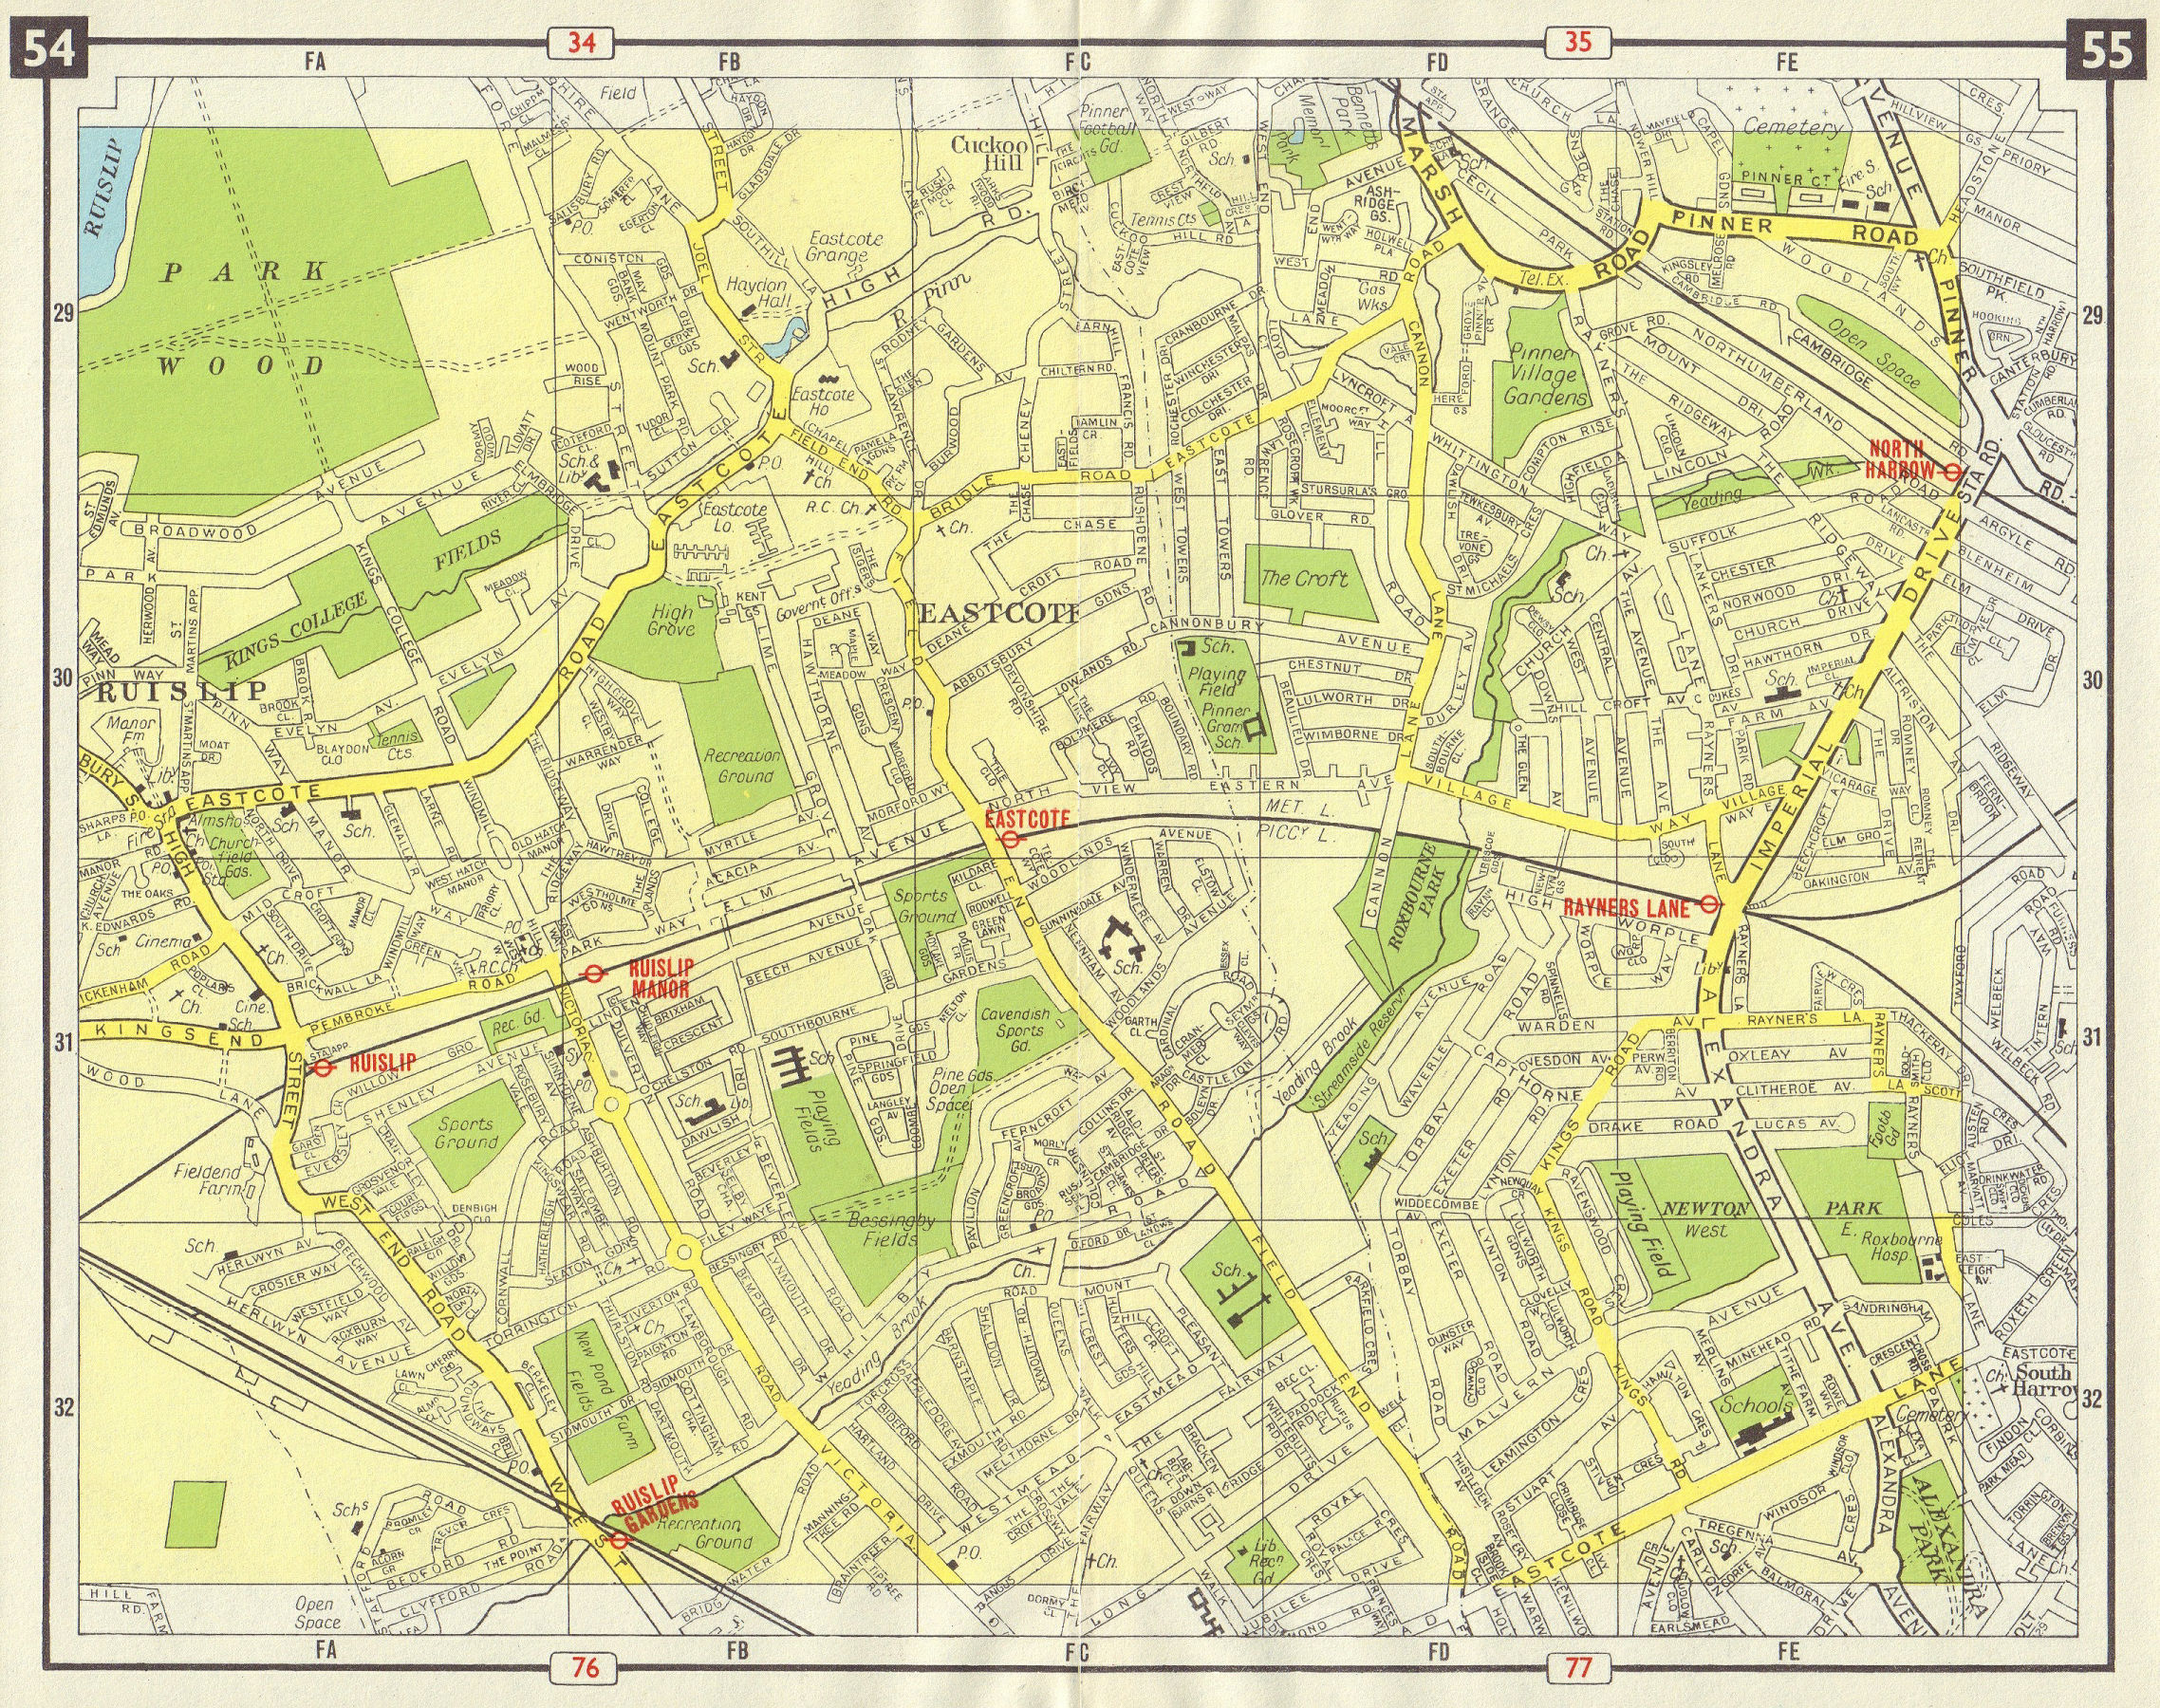 NW LONDON Eastcote Ruislip Manor Gardens Rayners Lane North Harrow 1965 map